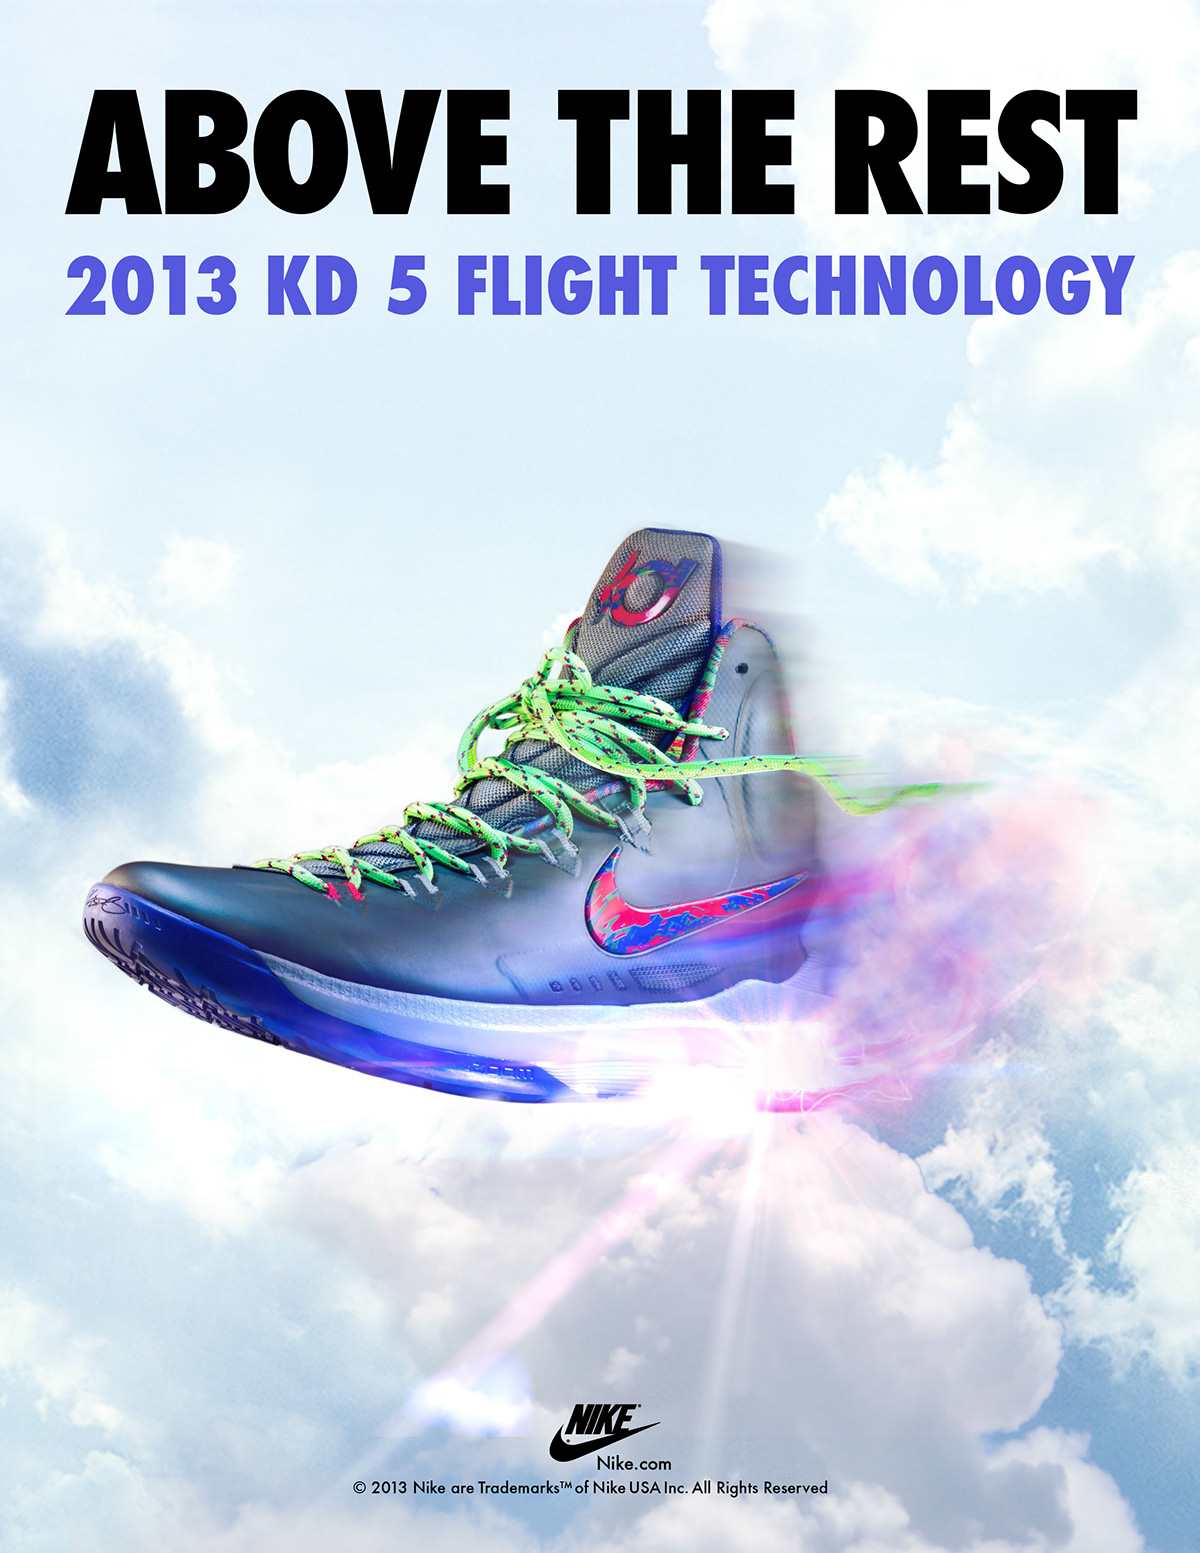 Nike Kevin Durrant basketball shoe ad photo manipulation